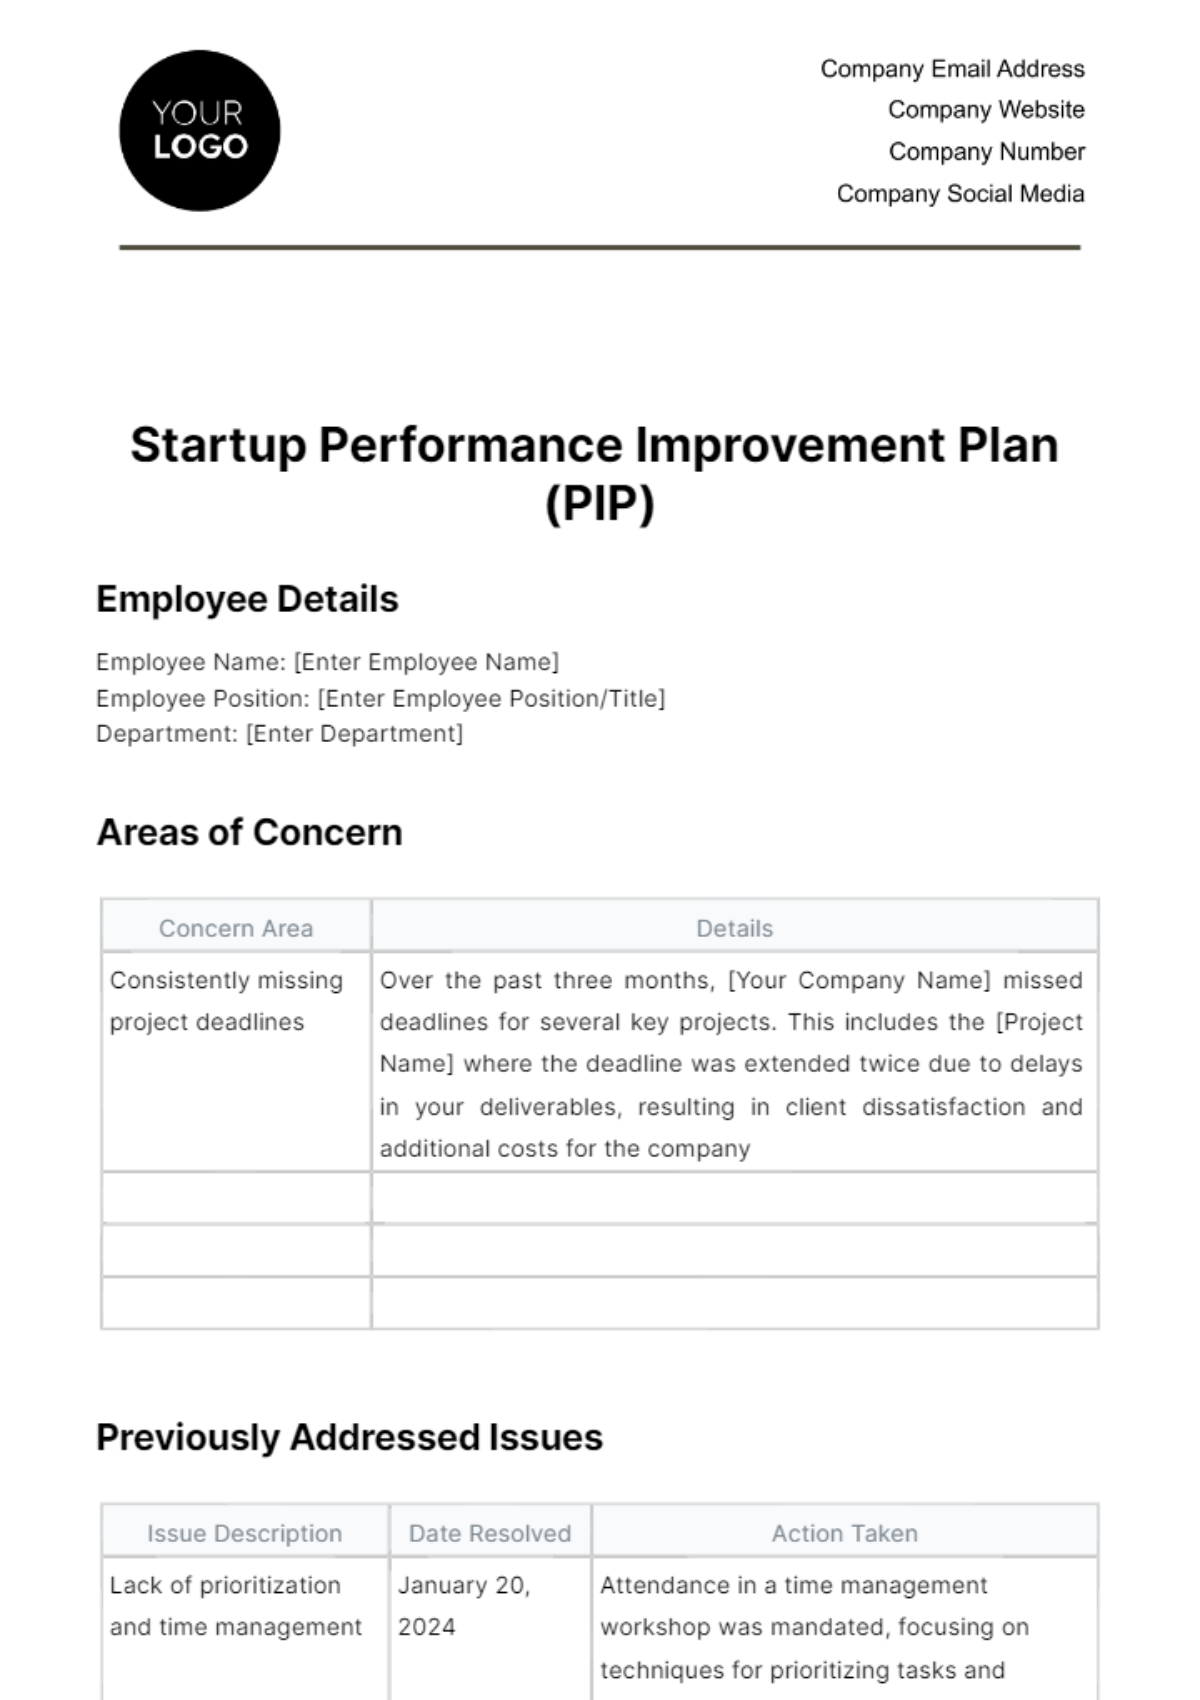 Startup Performance Improvement Plan (PIP) Template